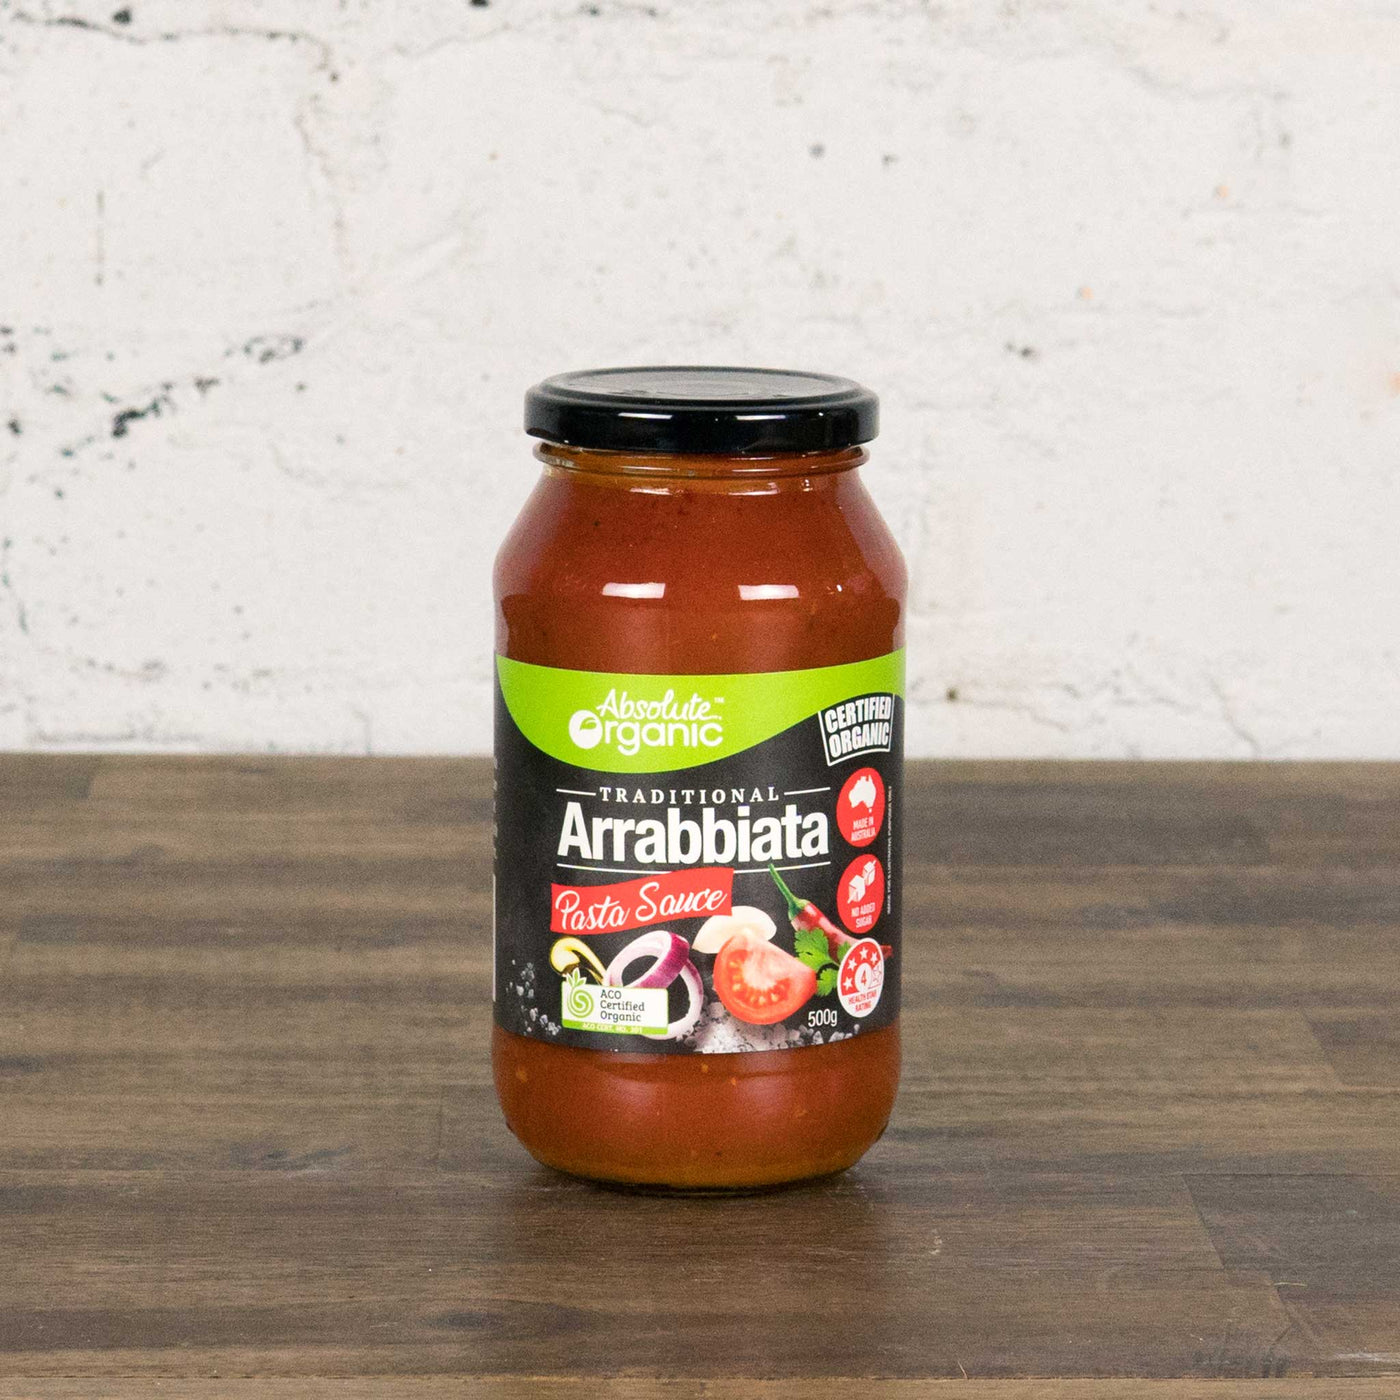 Absolute Organics Arrabbiata Sauce